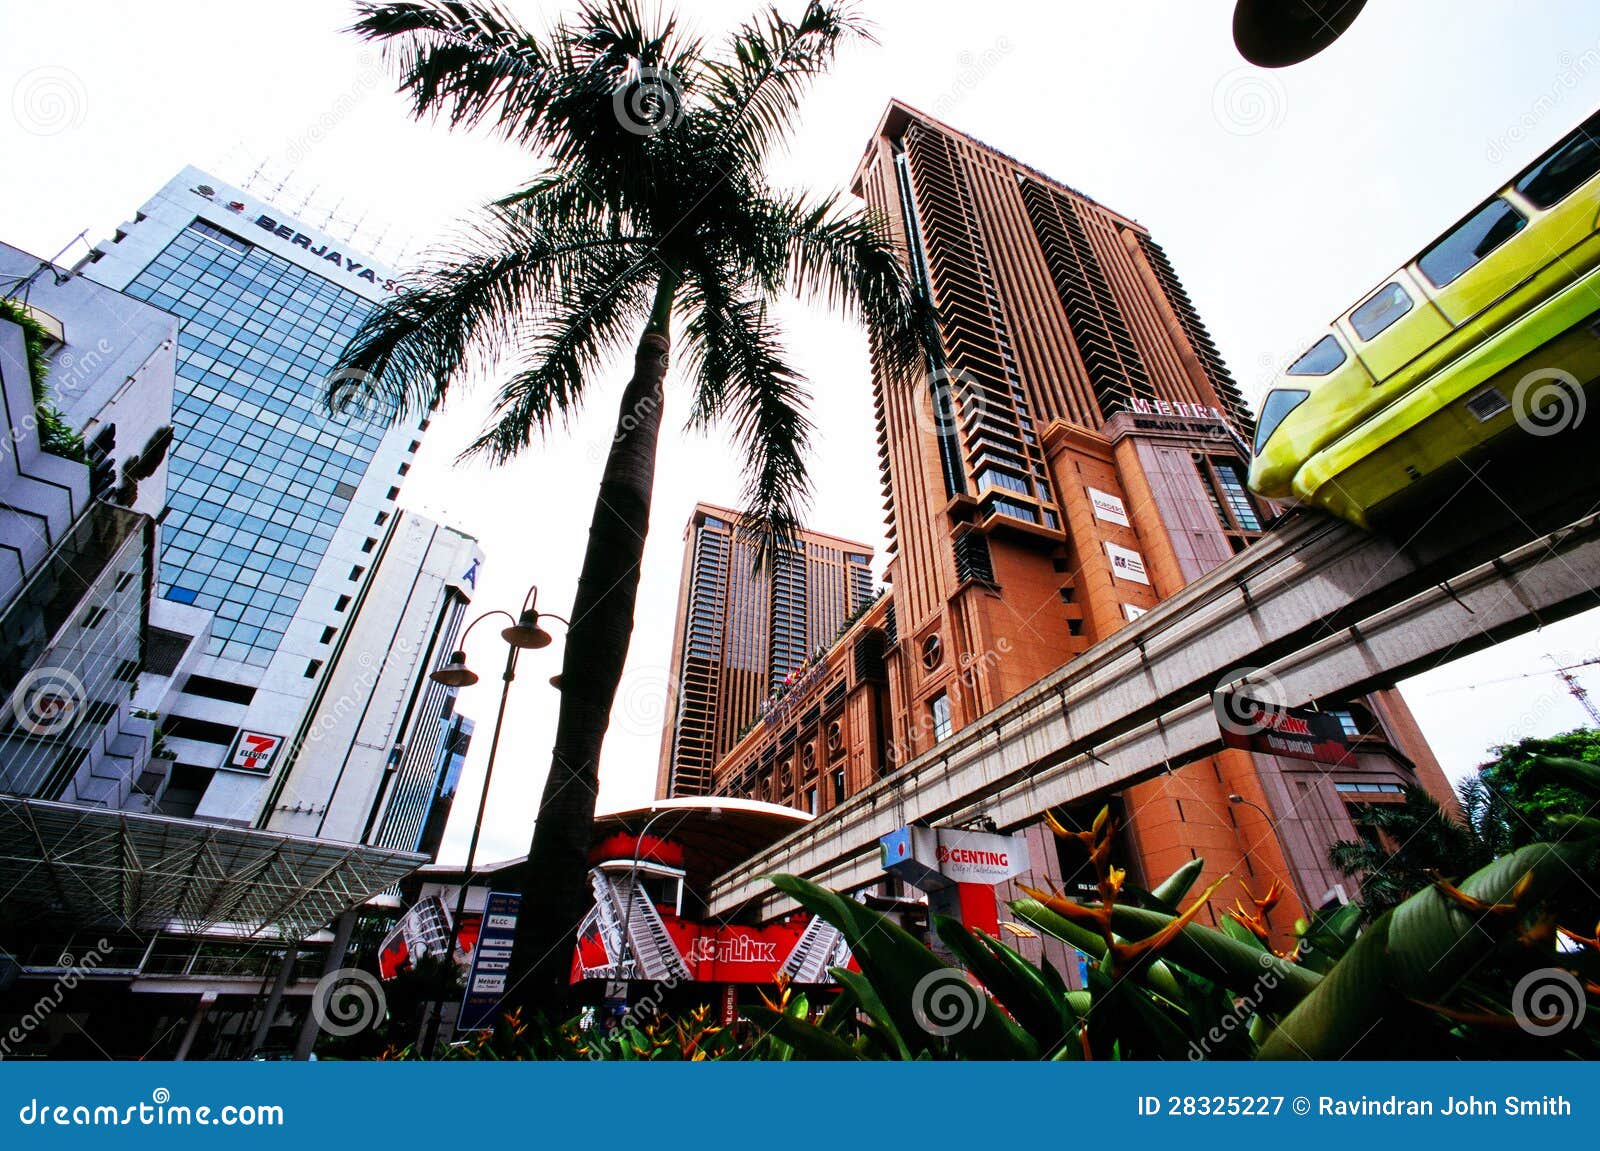 Berjaya Times Square Kuala Lumpur Editorial Photography Image Of Hotel Lumpur 28325227